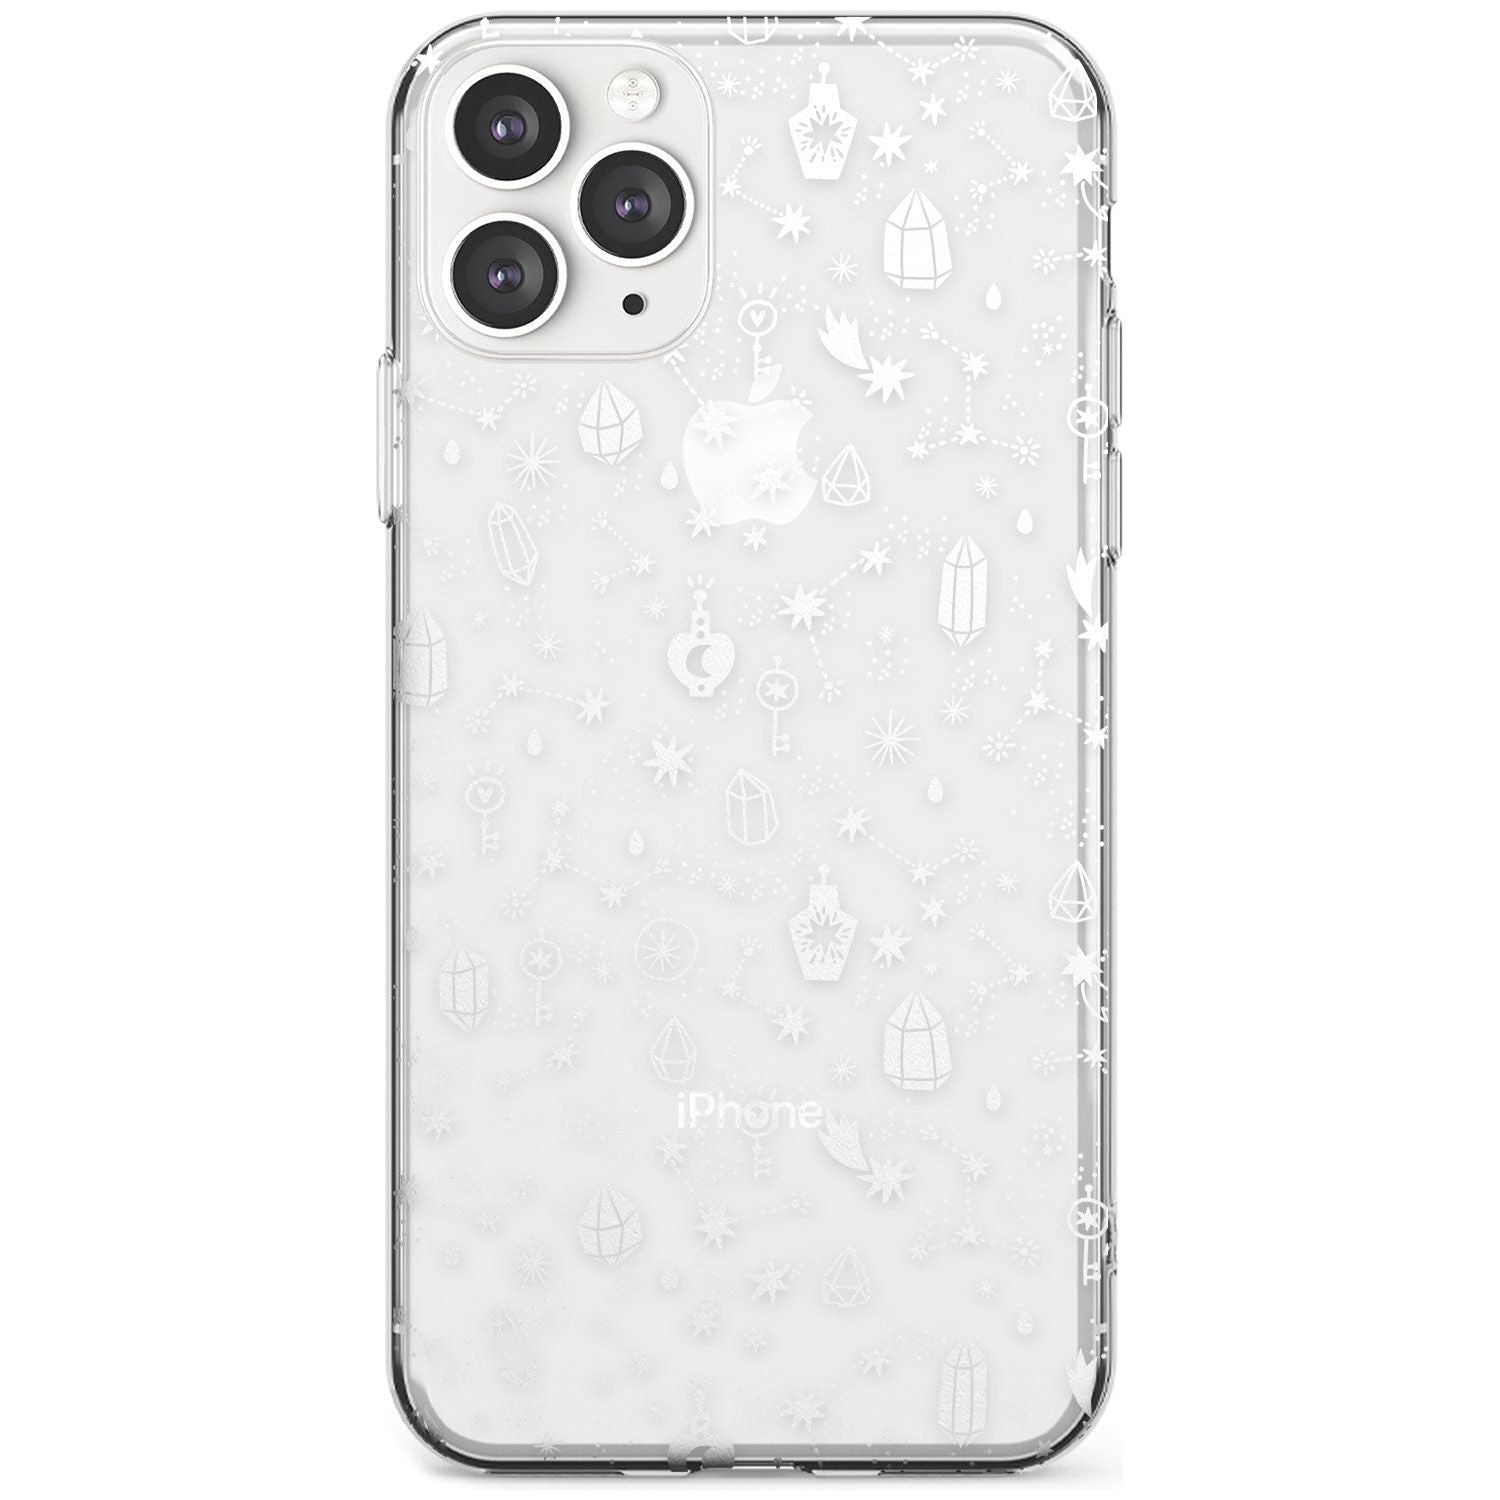 White Magic Slim TPU Phone Case for iPhone 11 Pro Max